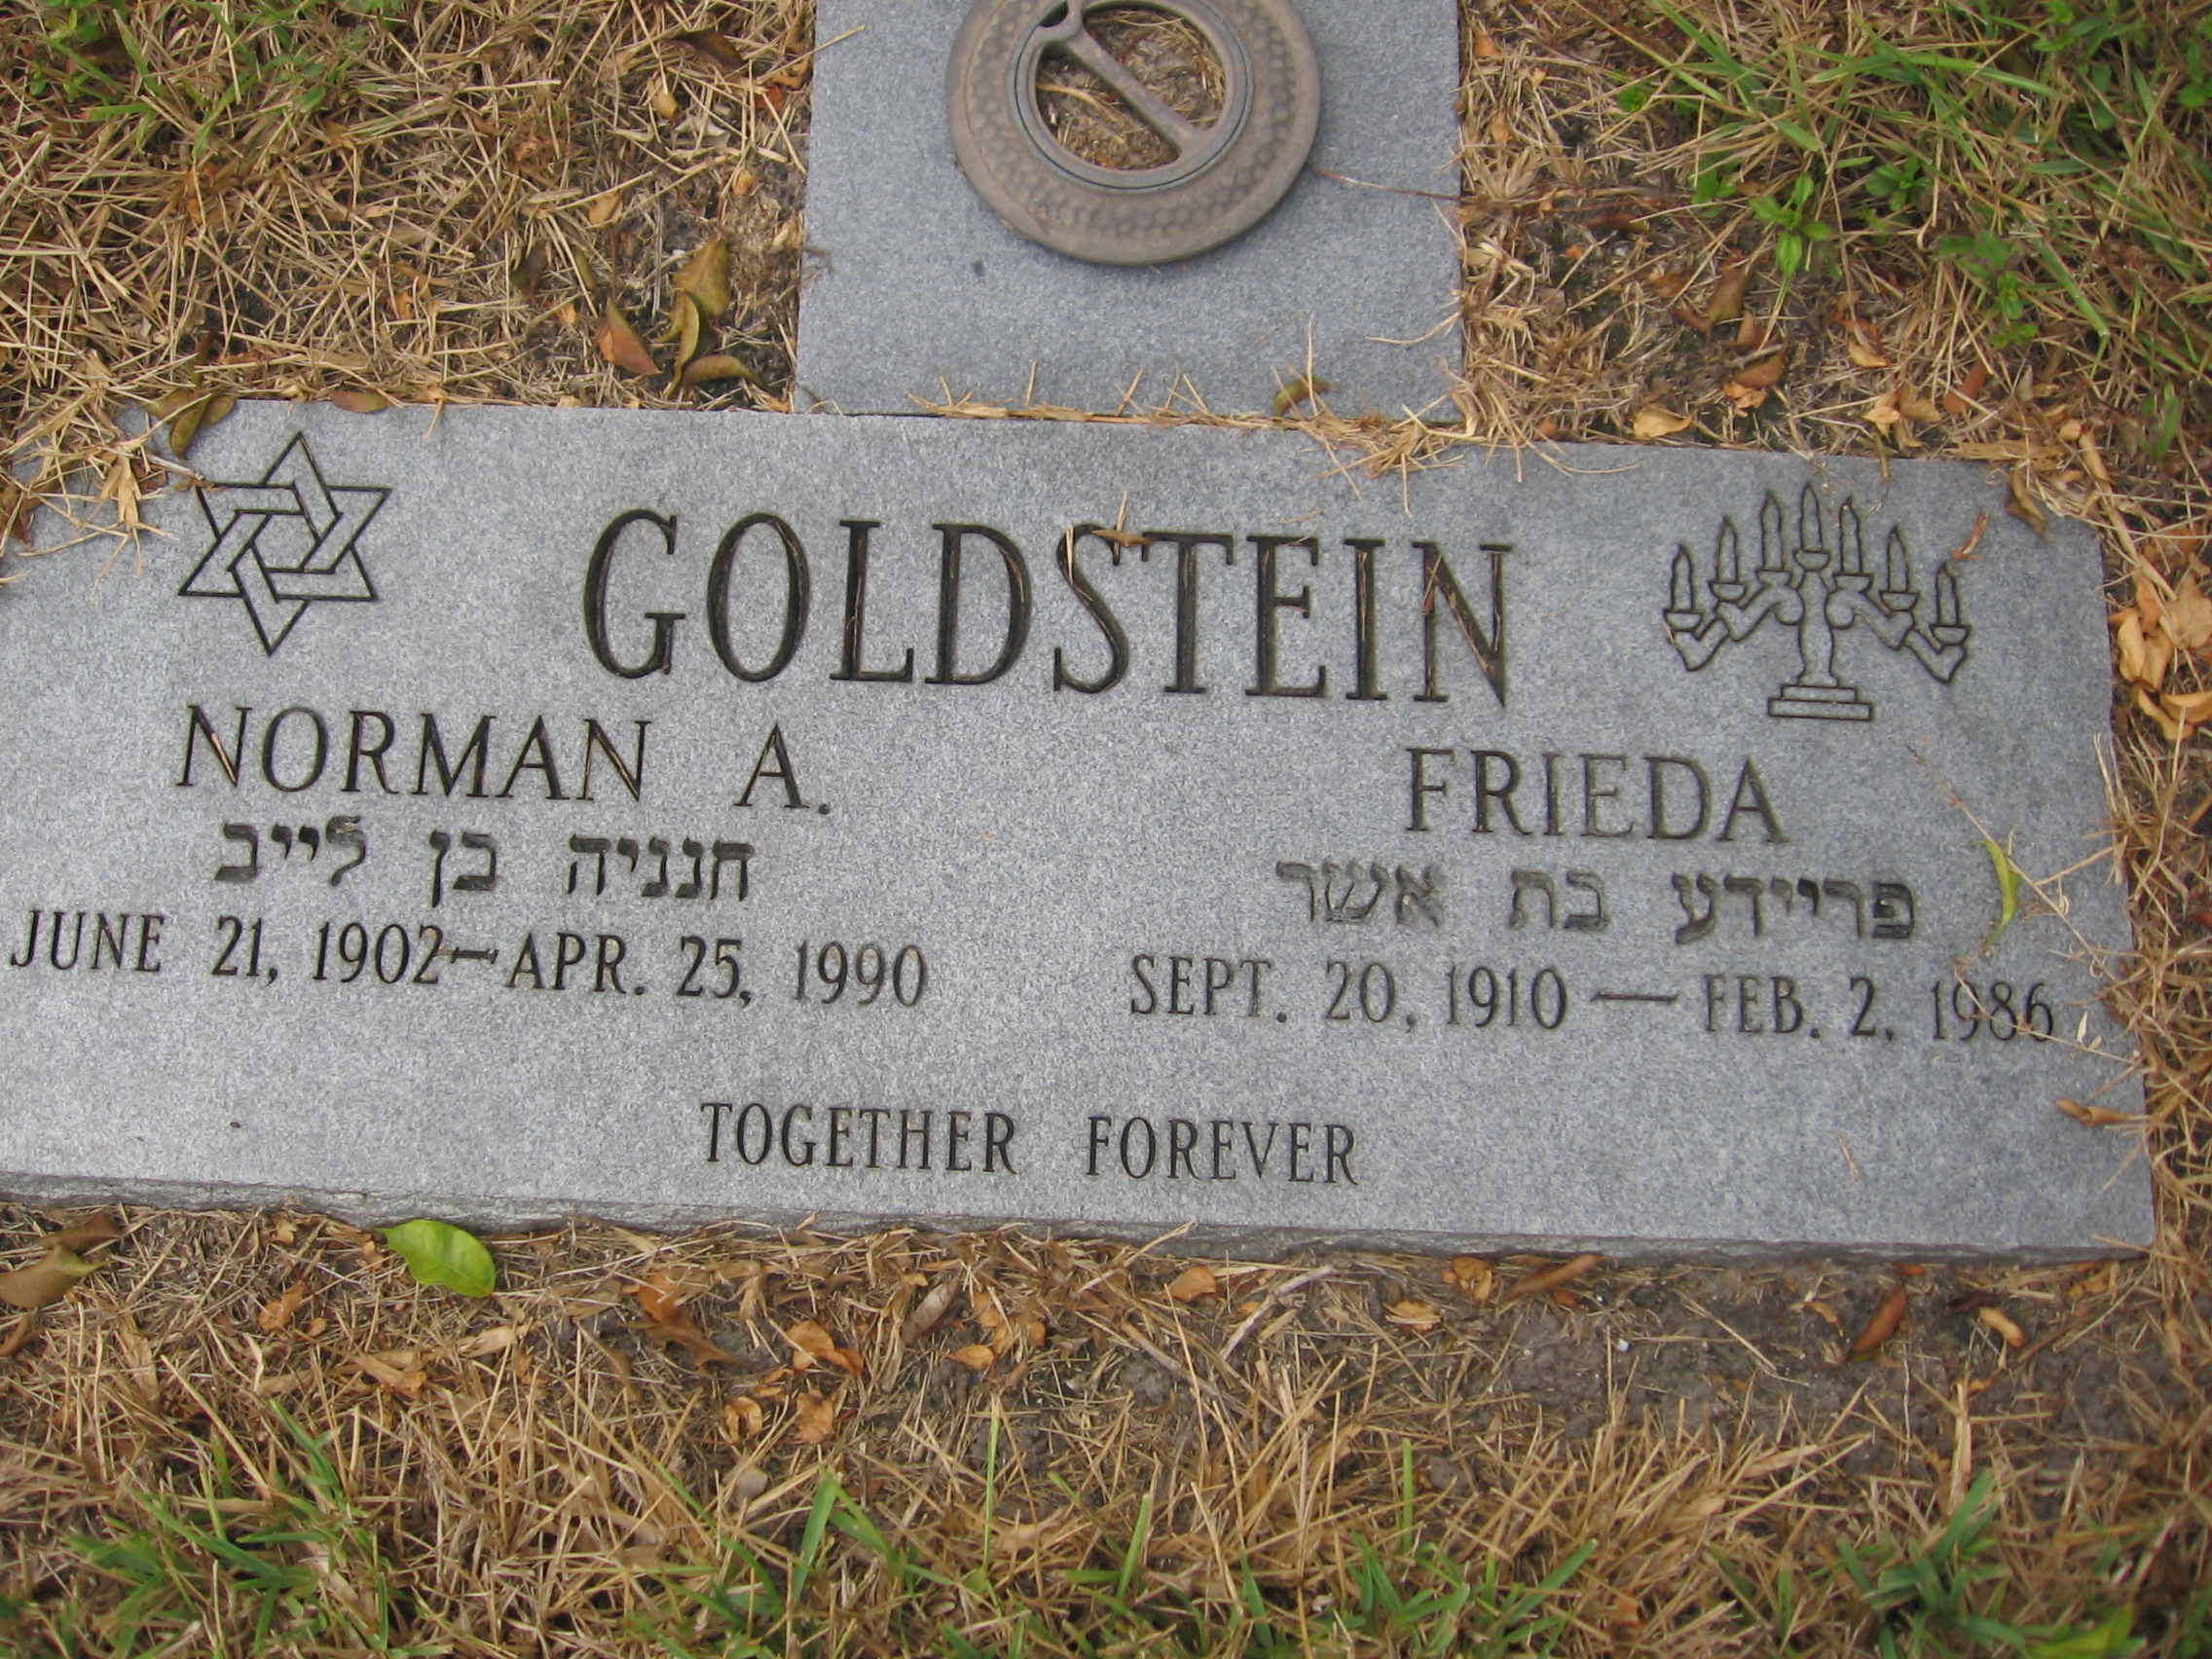 Norman A Goldstein